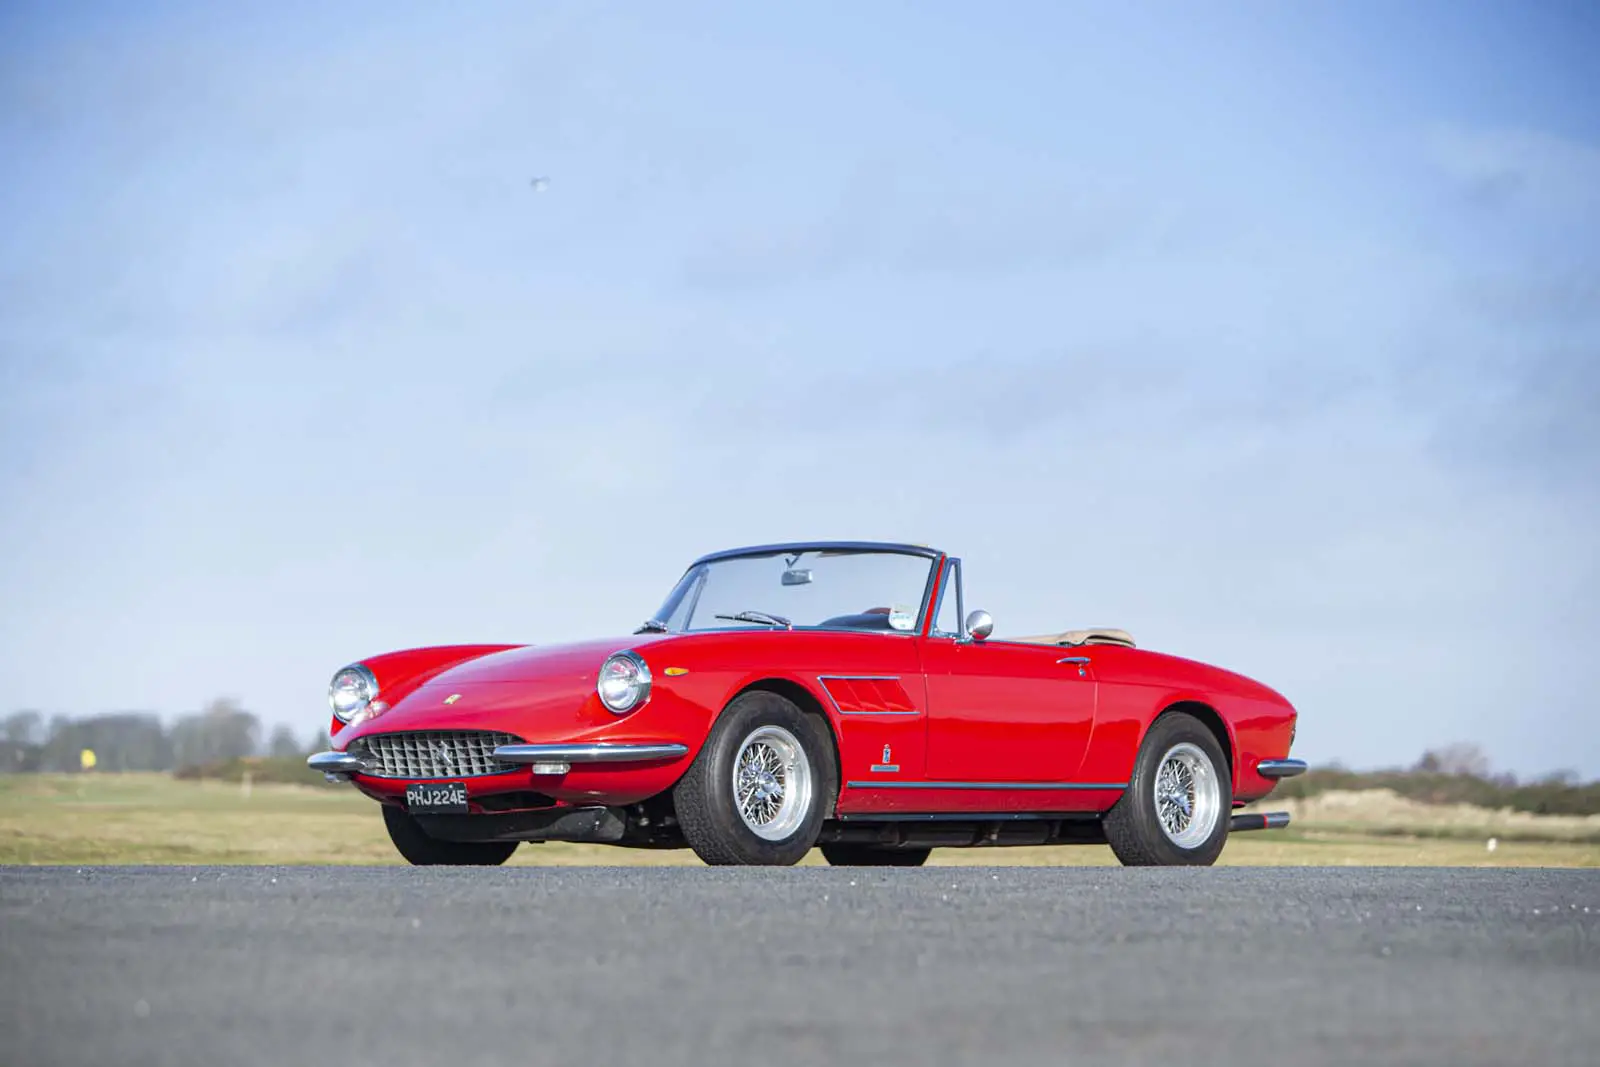 1967 Ferrari 330 GTS - Ferrari 330 GTS Is Top Seller At Bonhams UK Live Sale At Goodwood SpeedWeek